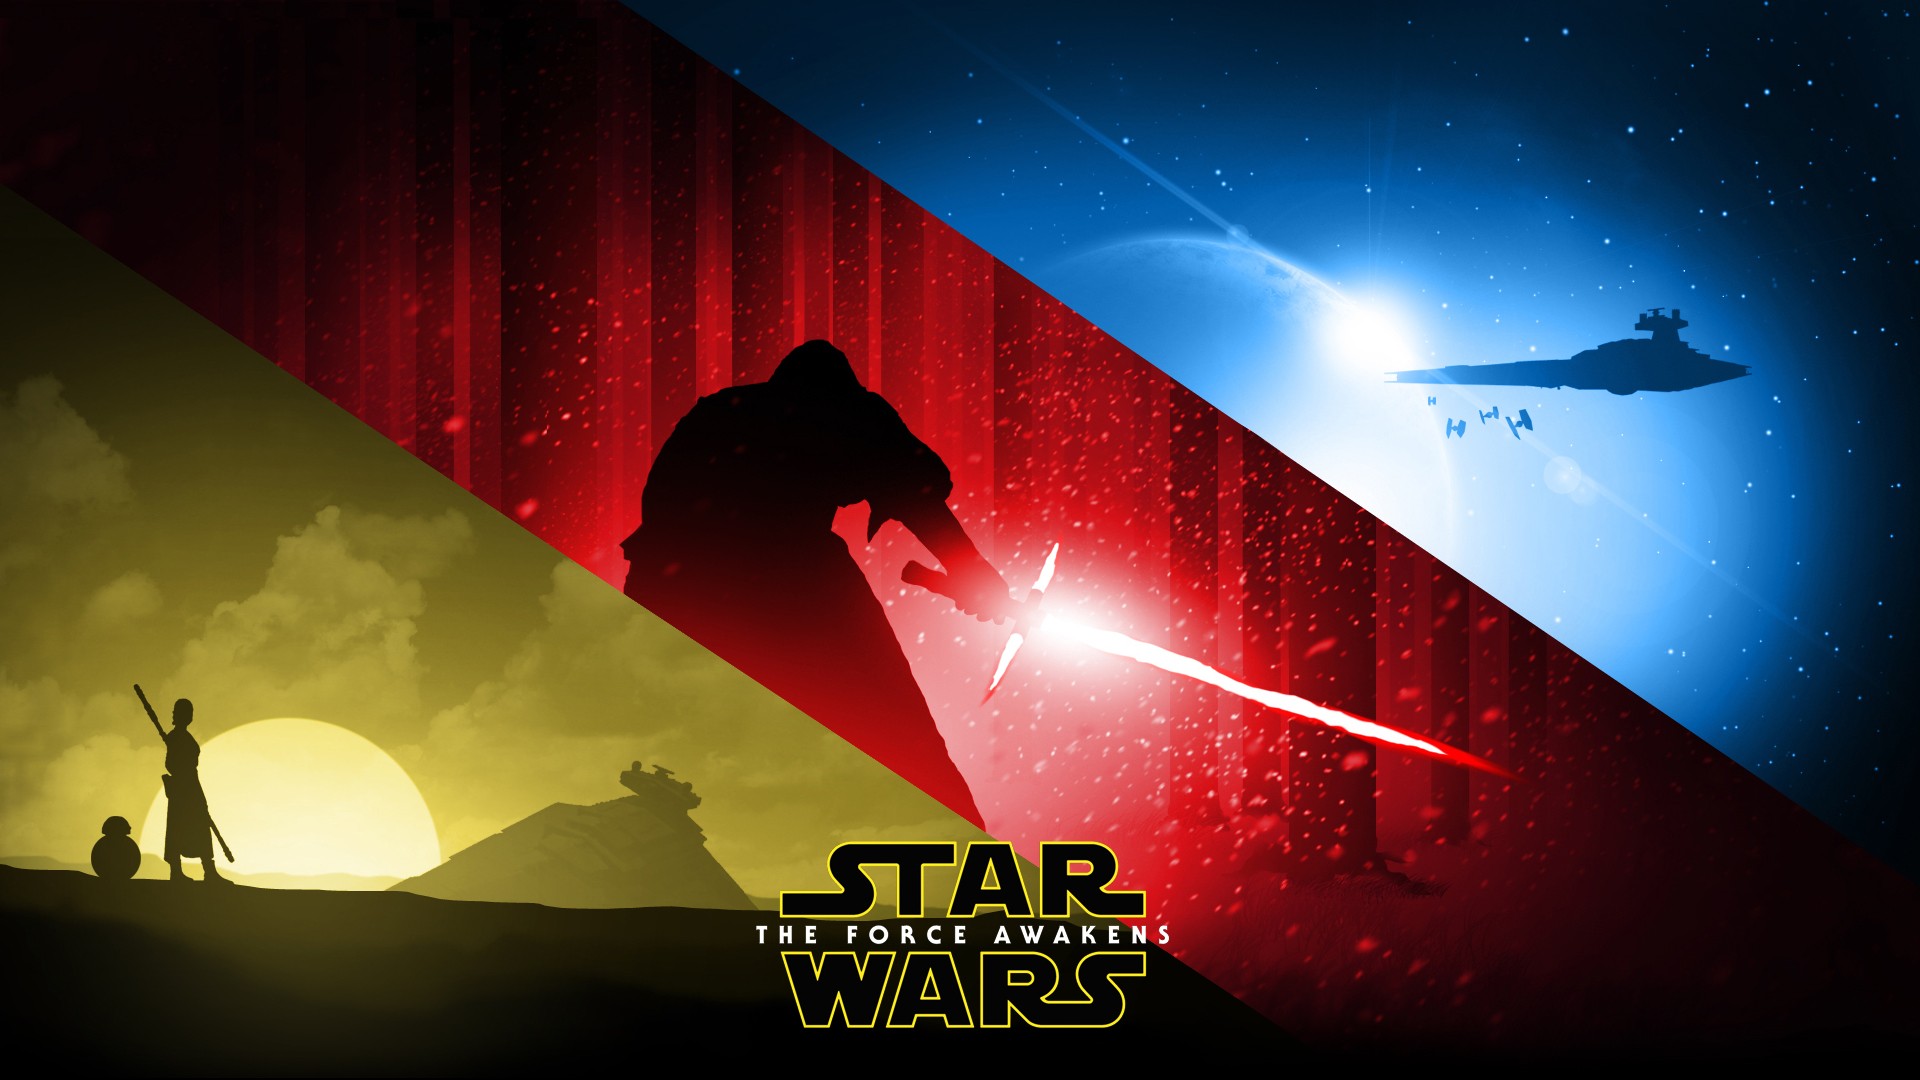 Star Wars Minimalism Yoda Han Solo Princess Leia R2 D2 Luke Skywalker Chewbacca C 3po Darth Vader Stormtrooper Wallpapers Hd Desktop And Mobile Backgrounds